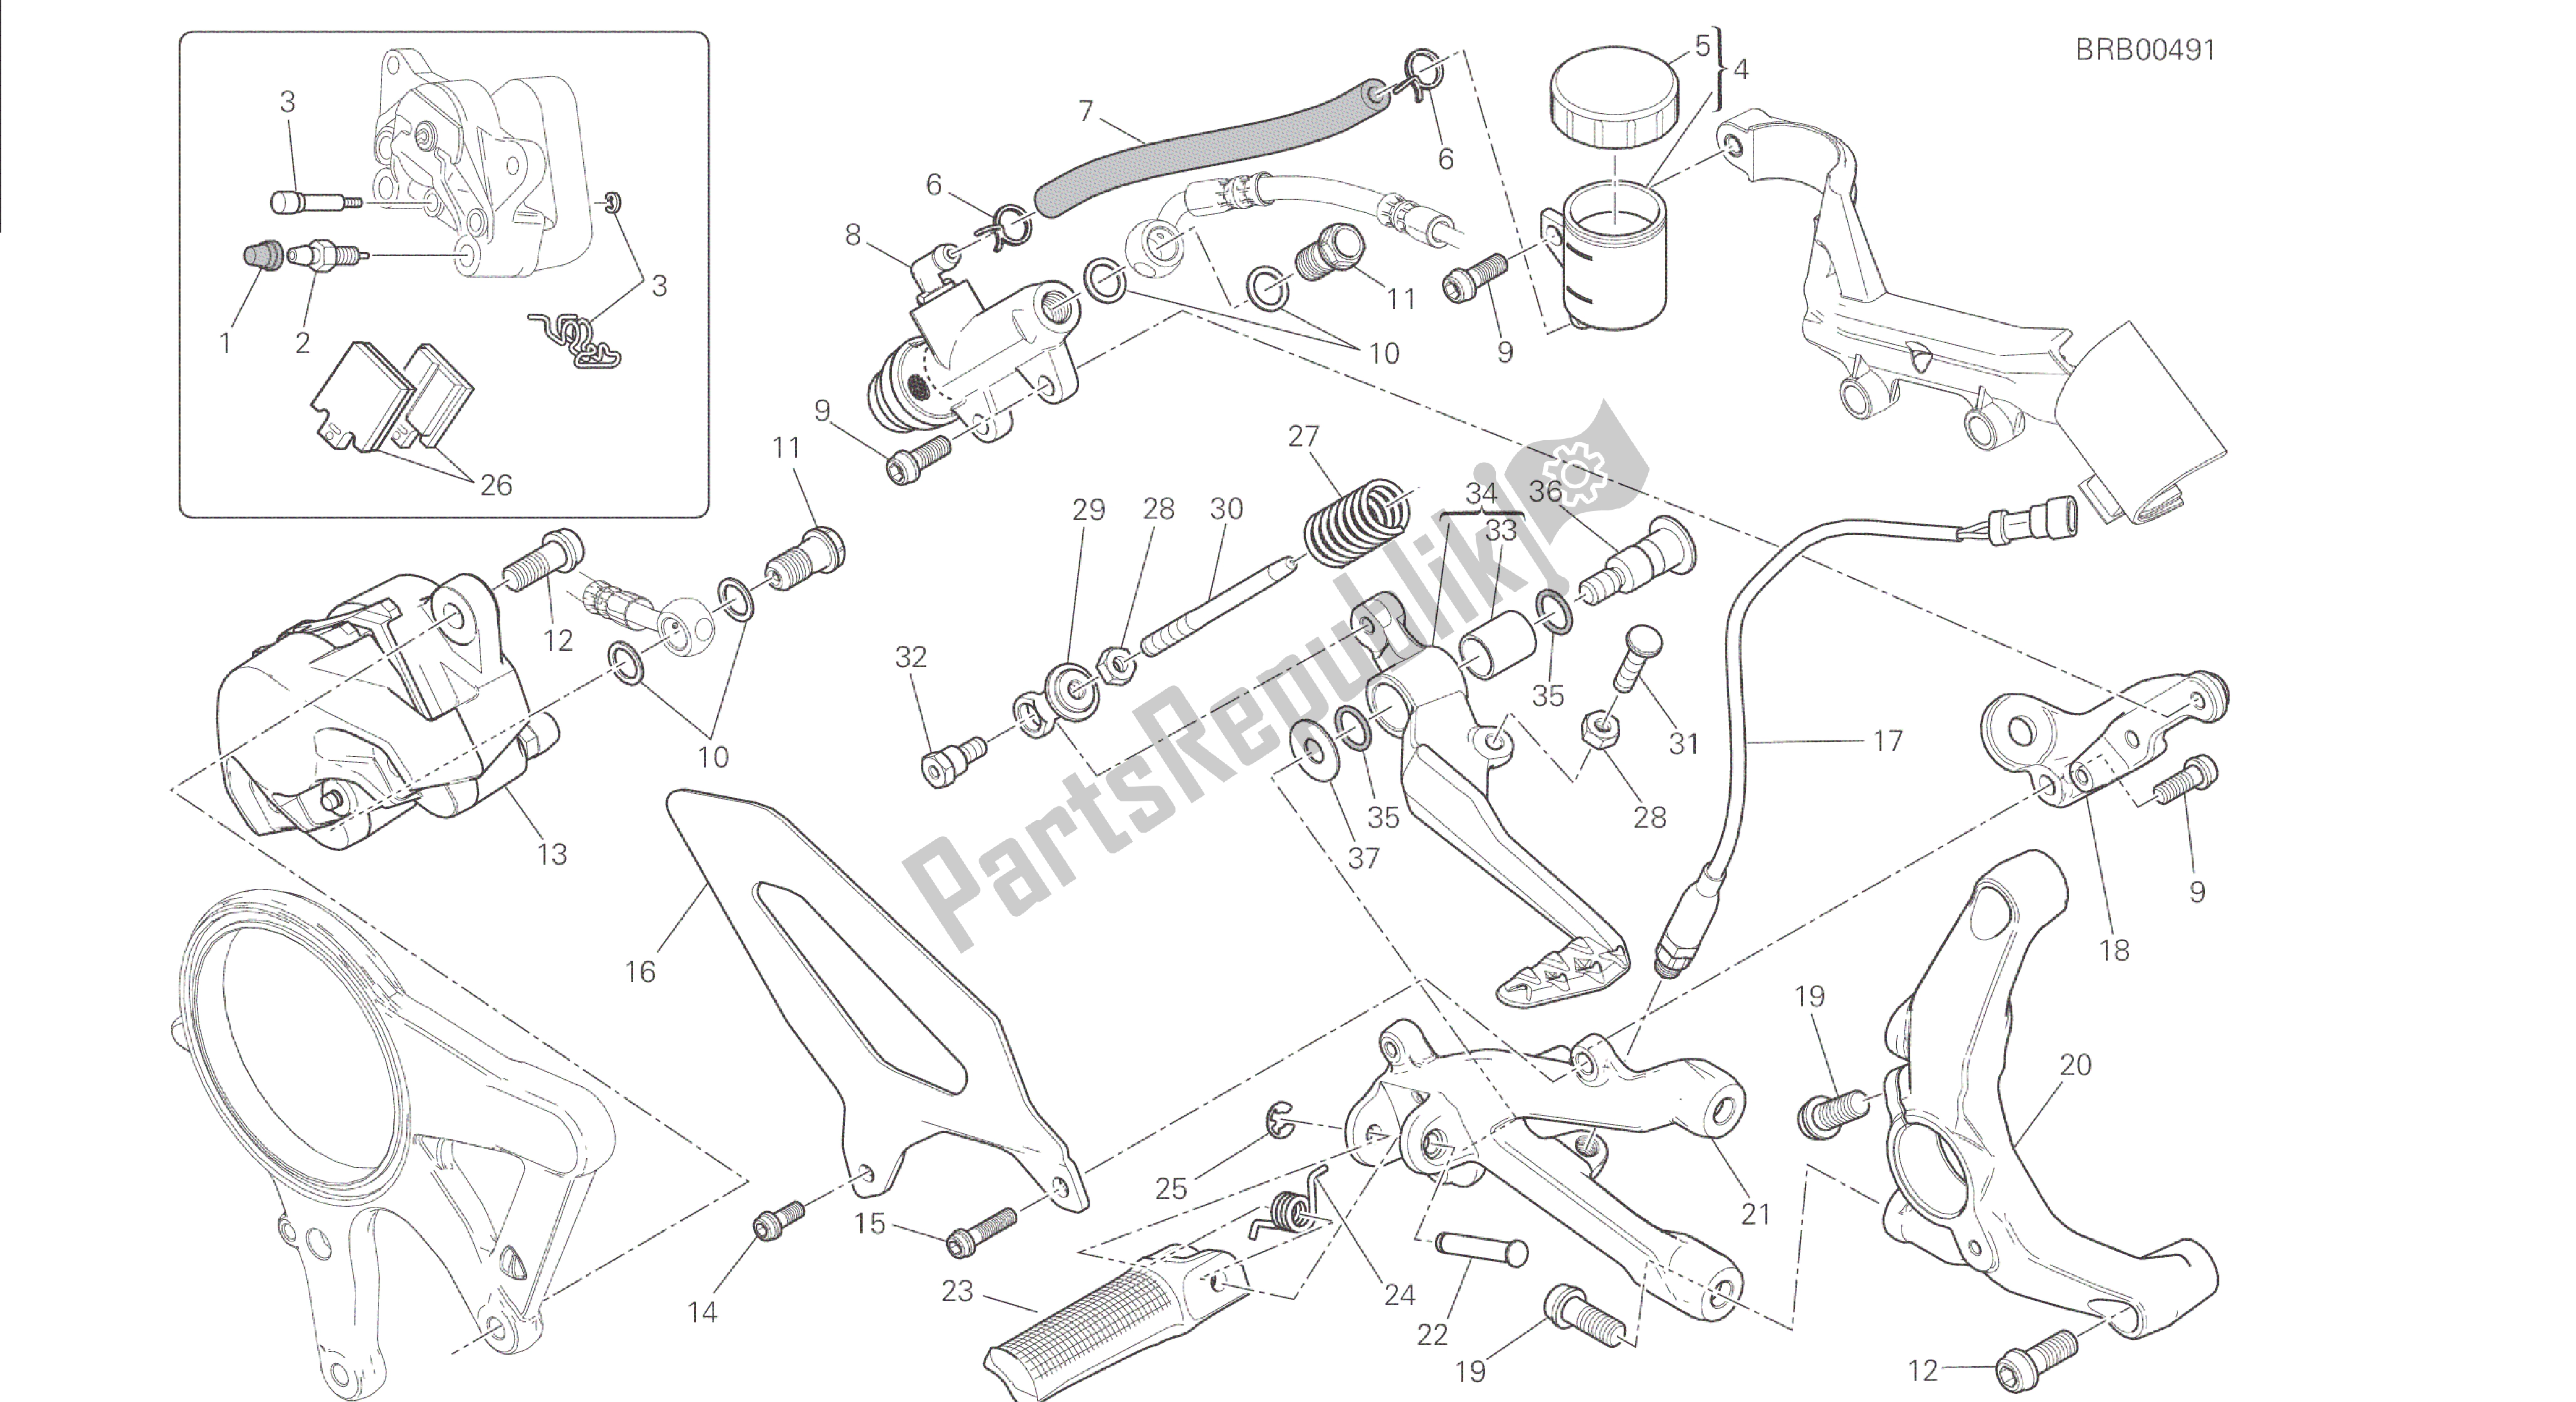 Alle onderdelen voor de Tekening 025 - Freno Posteriore [mod: 1299; Xst: Aus, Eur, Fra, Jap, Twn] Groepsframe van de Ducati Panigale 1299 2015